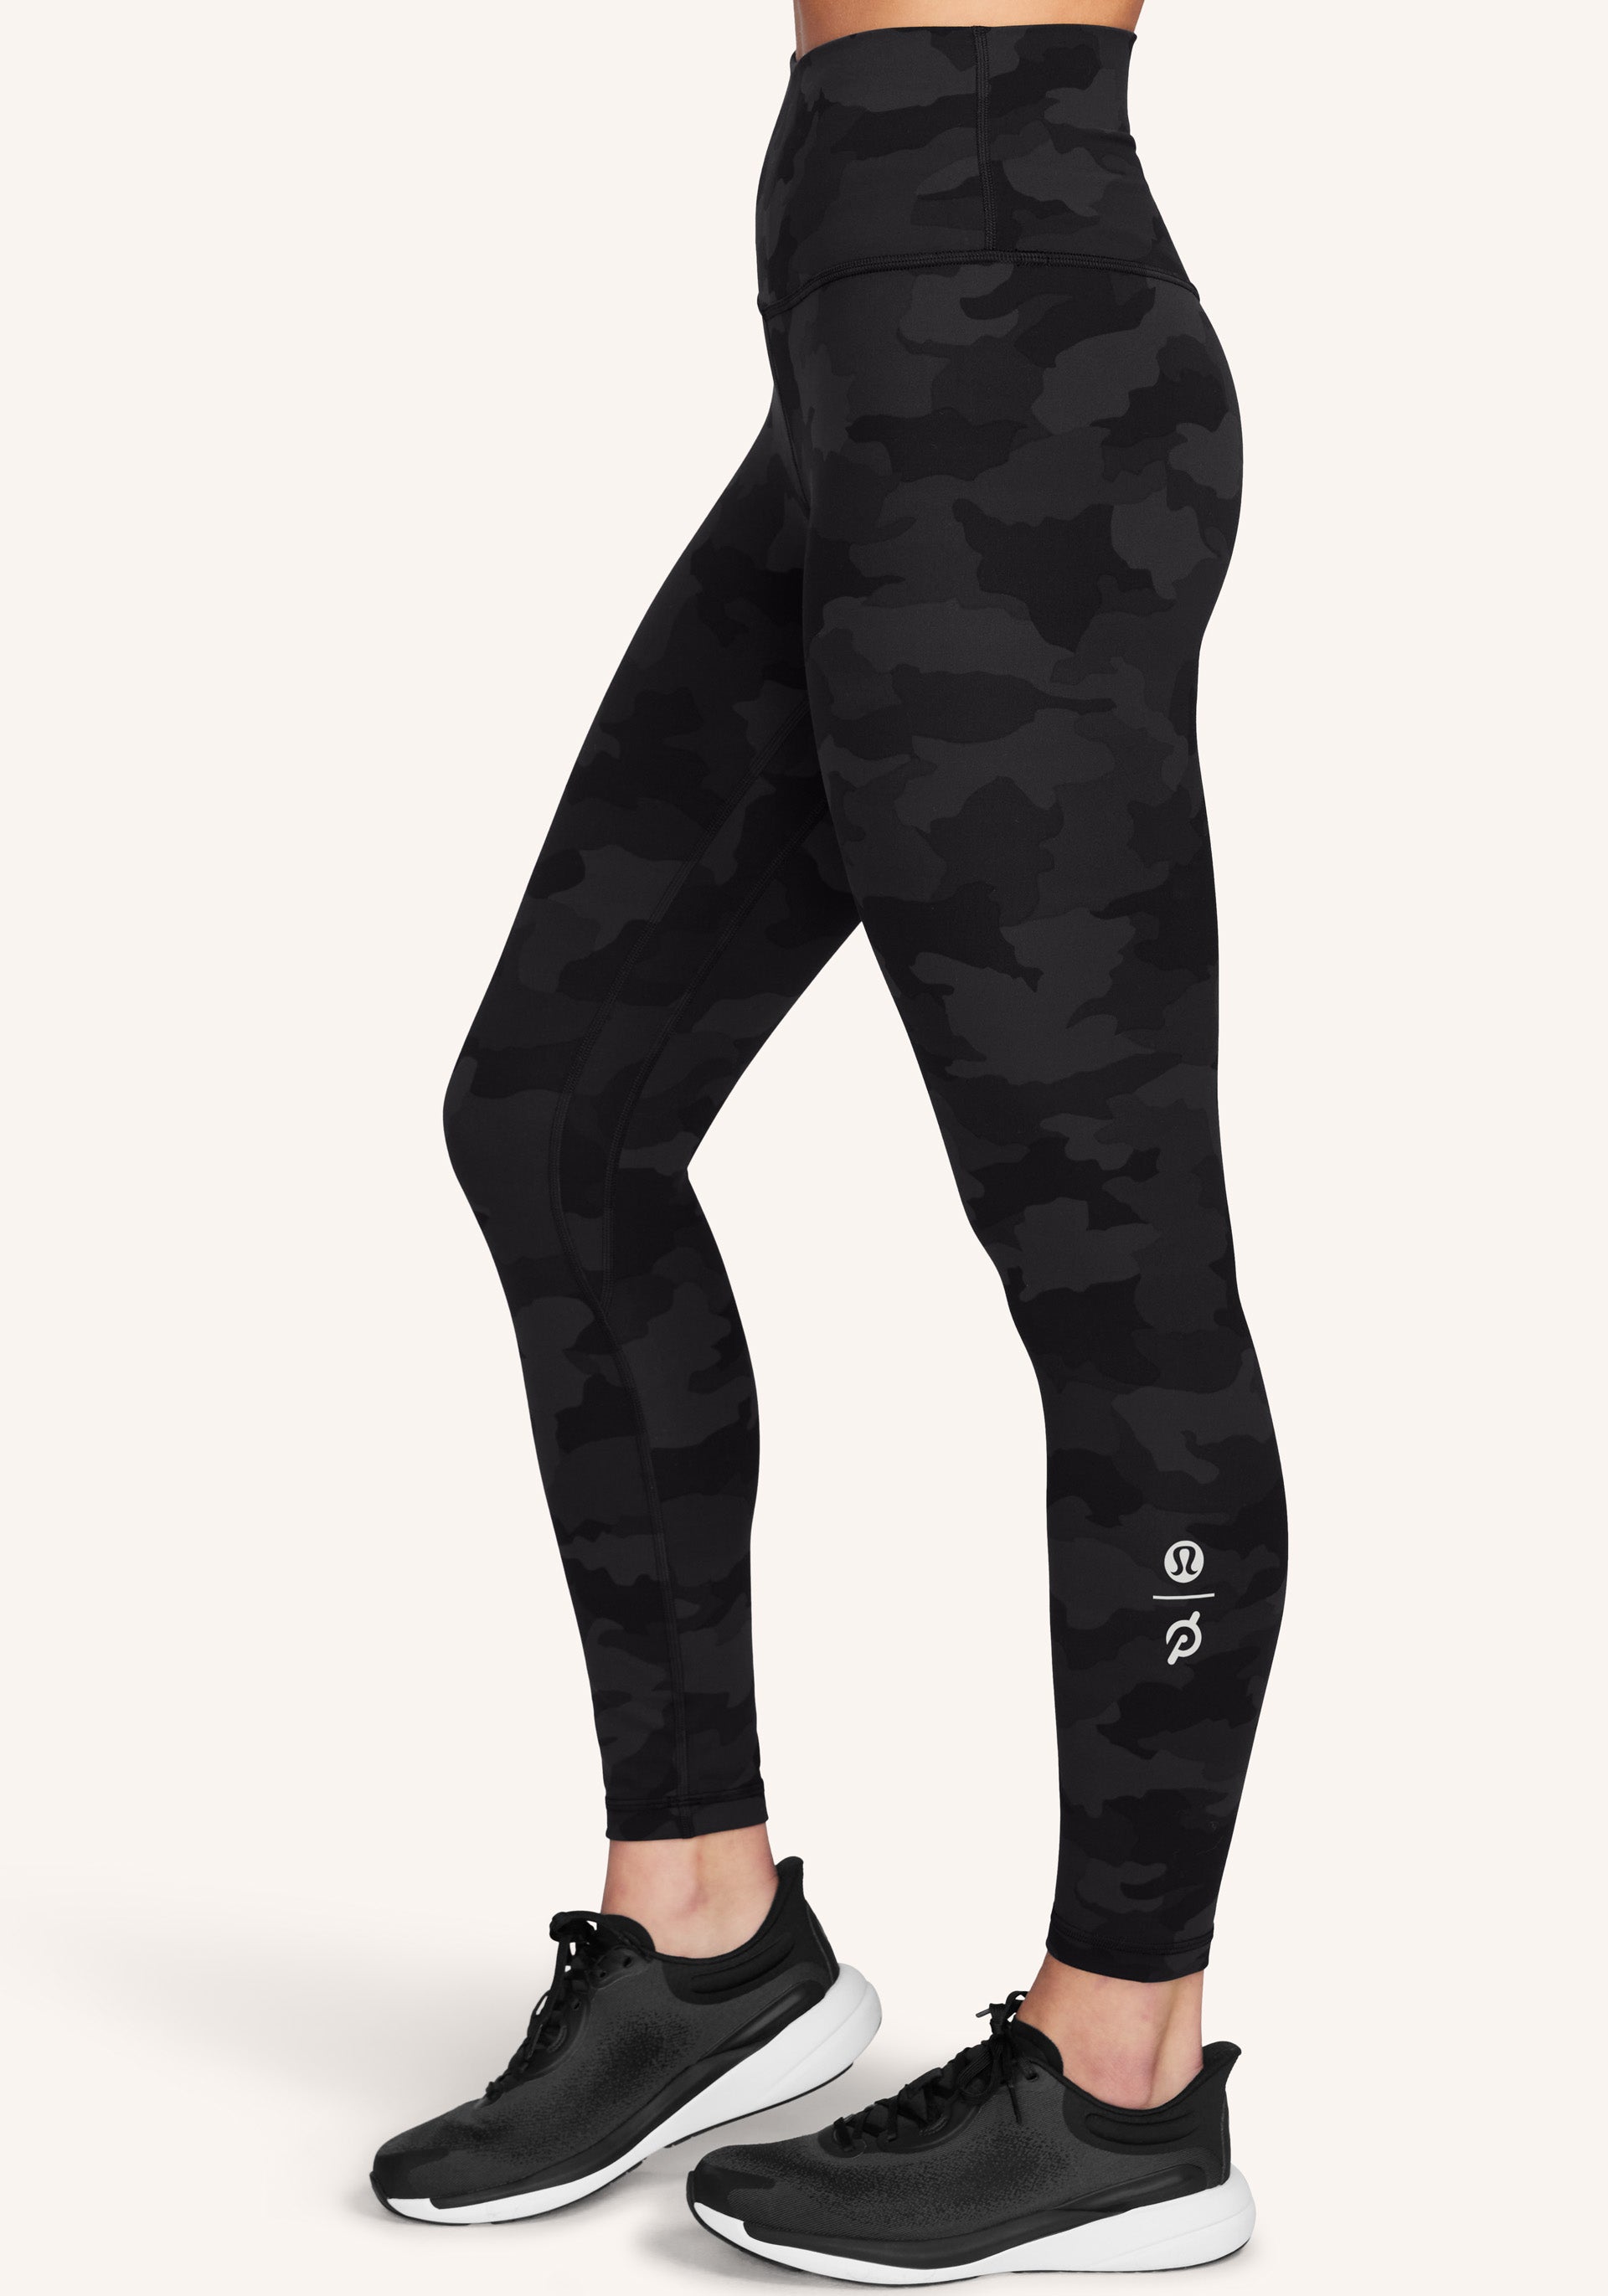 Buy Lululemon Align Pant Full Length Yoga Pants (Black, 12) at